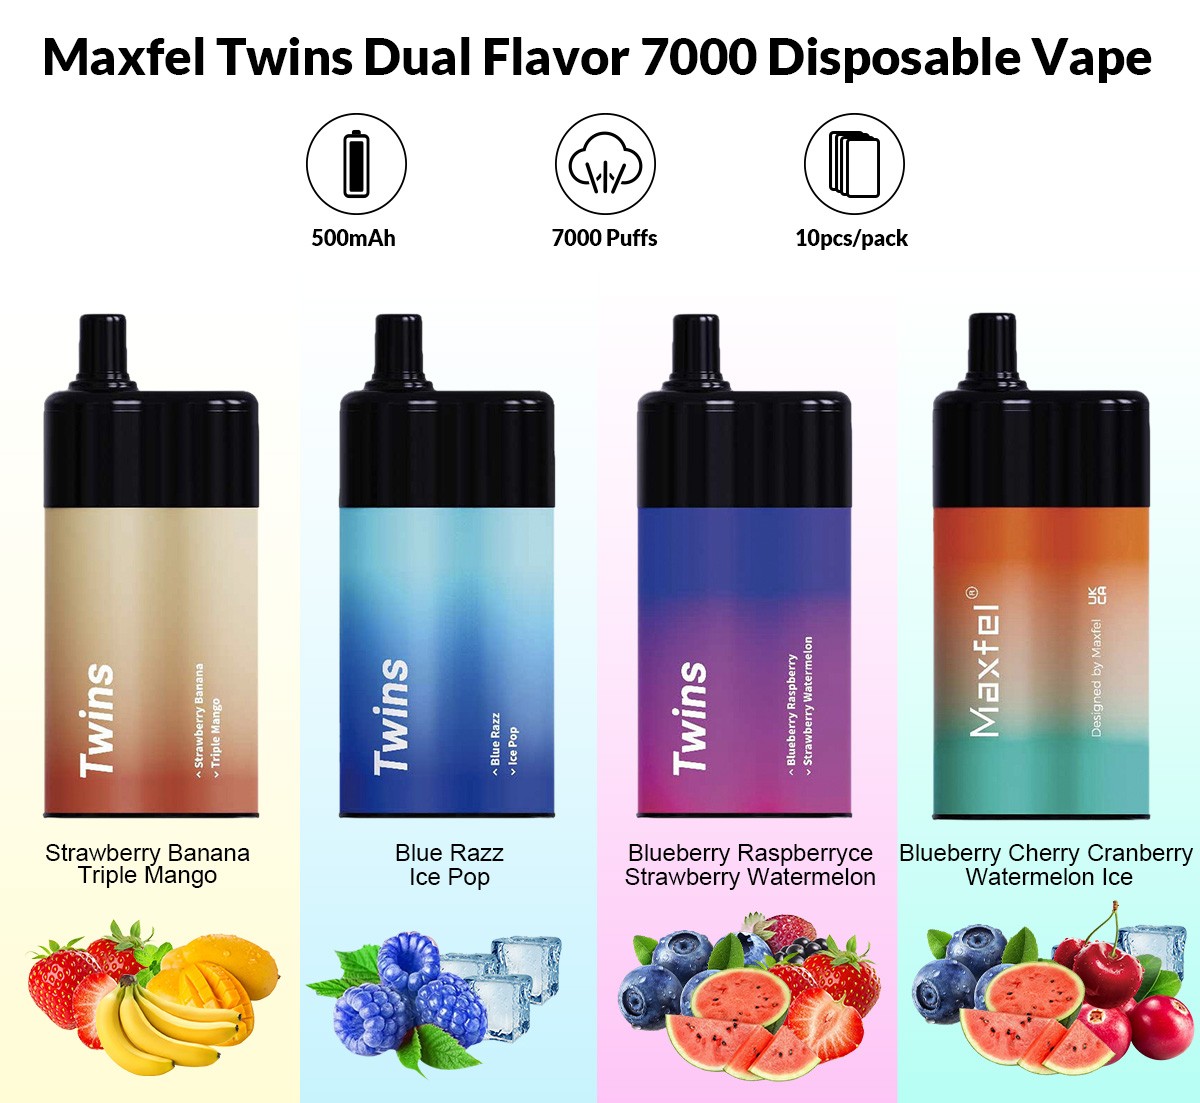 Maxfel Twins Dual Flavor 7000 Disposable